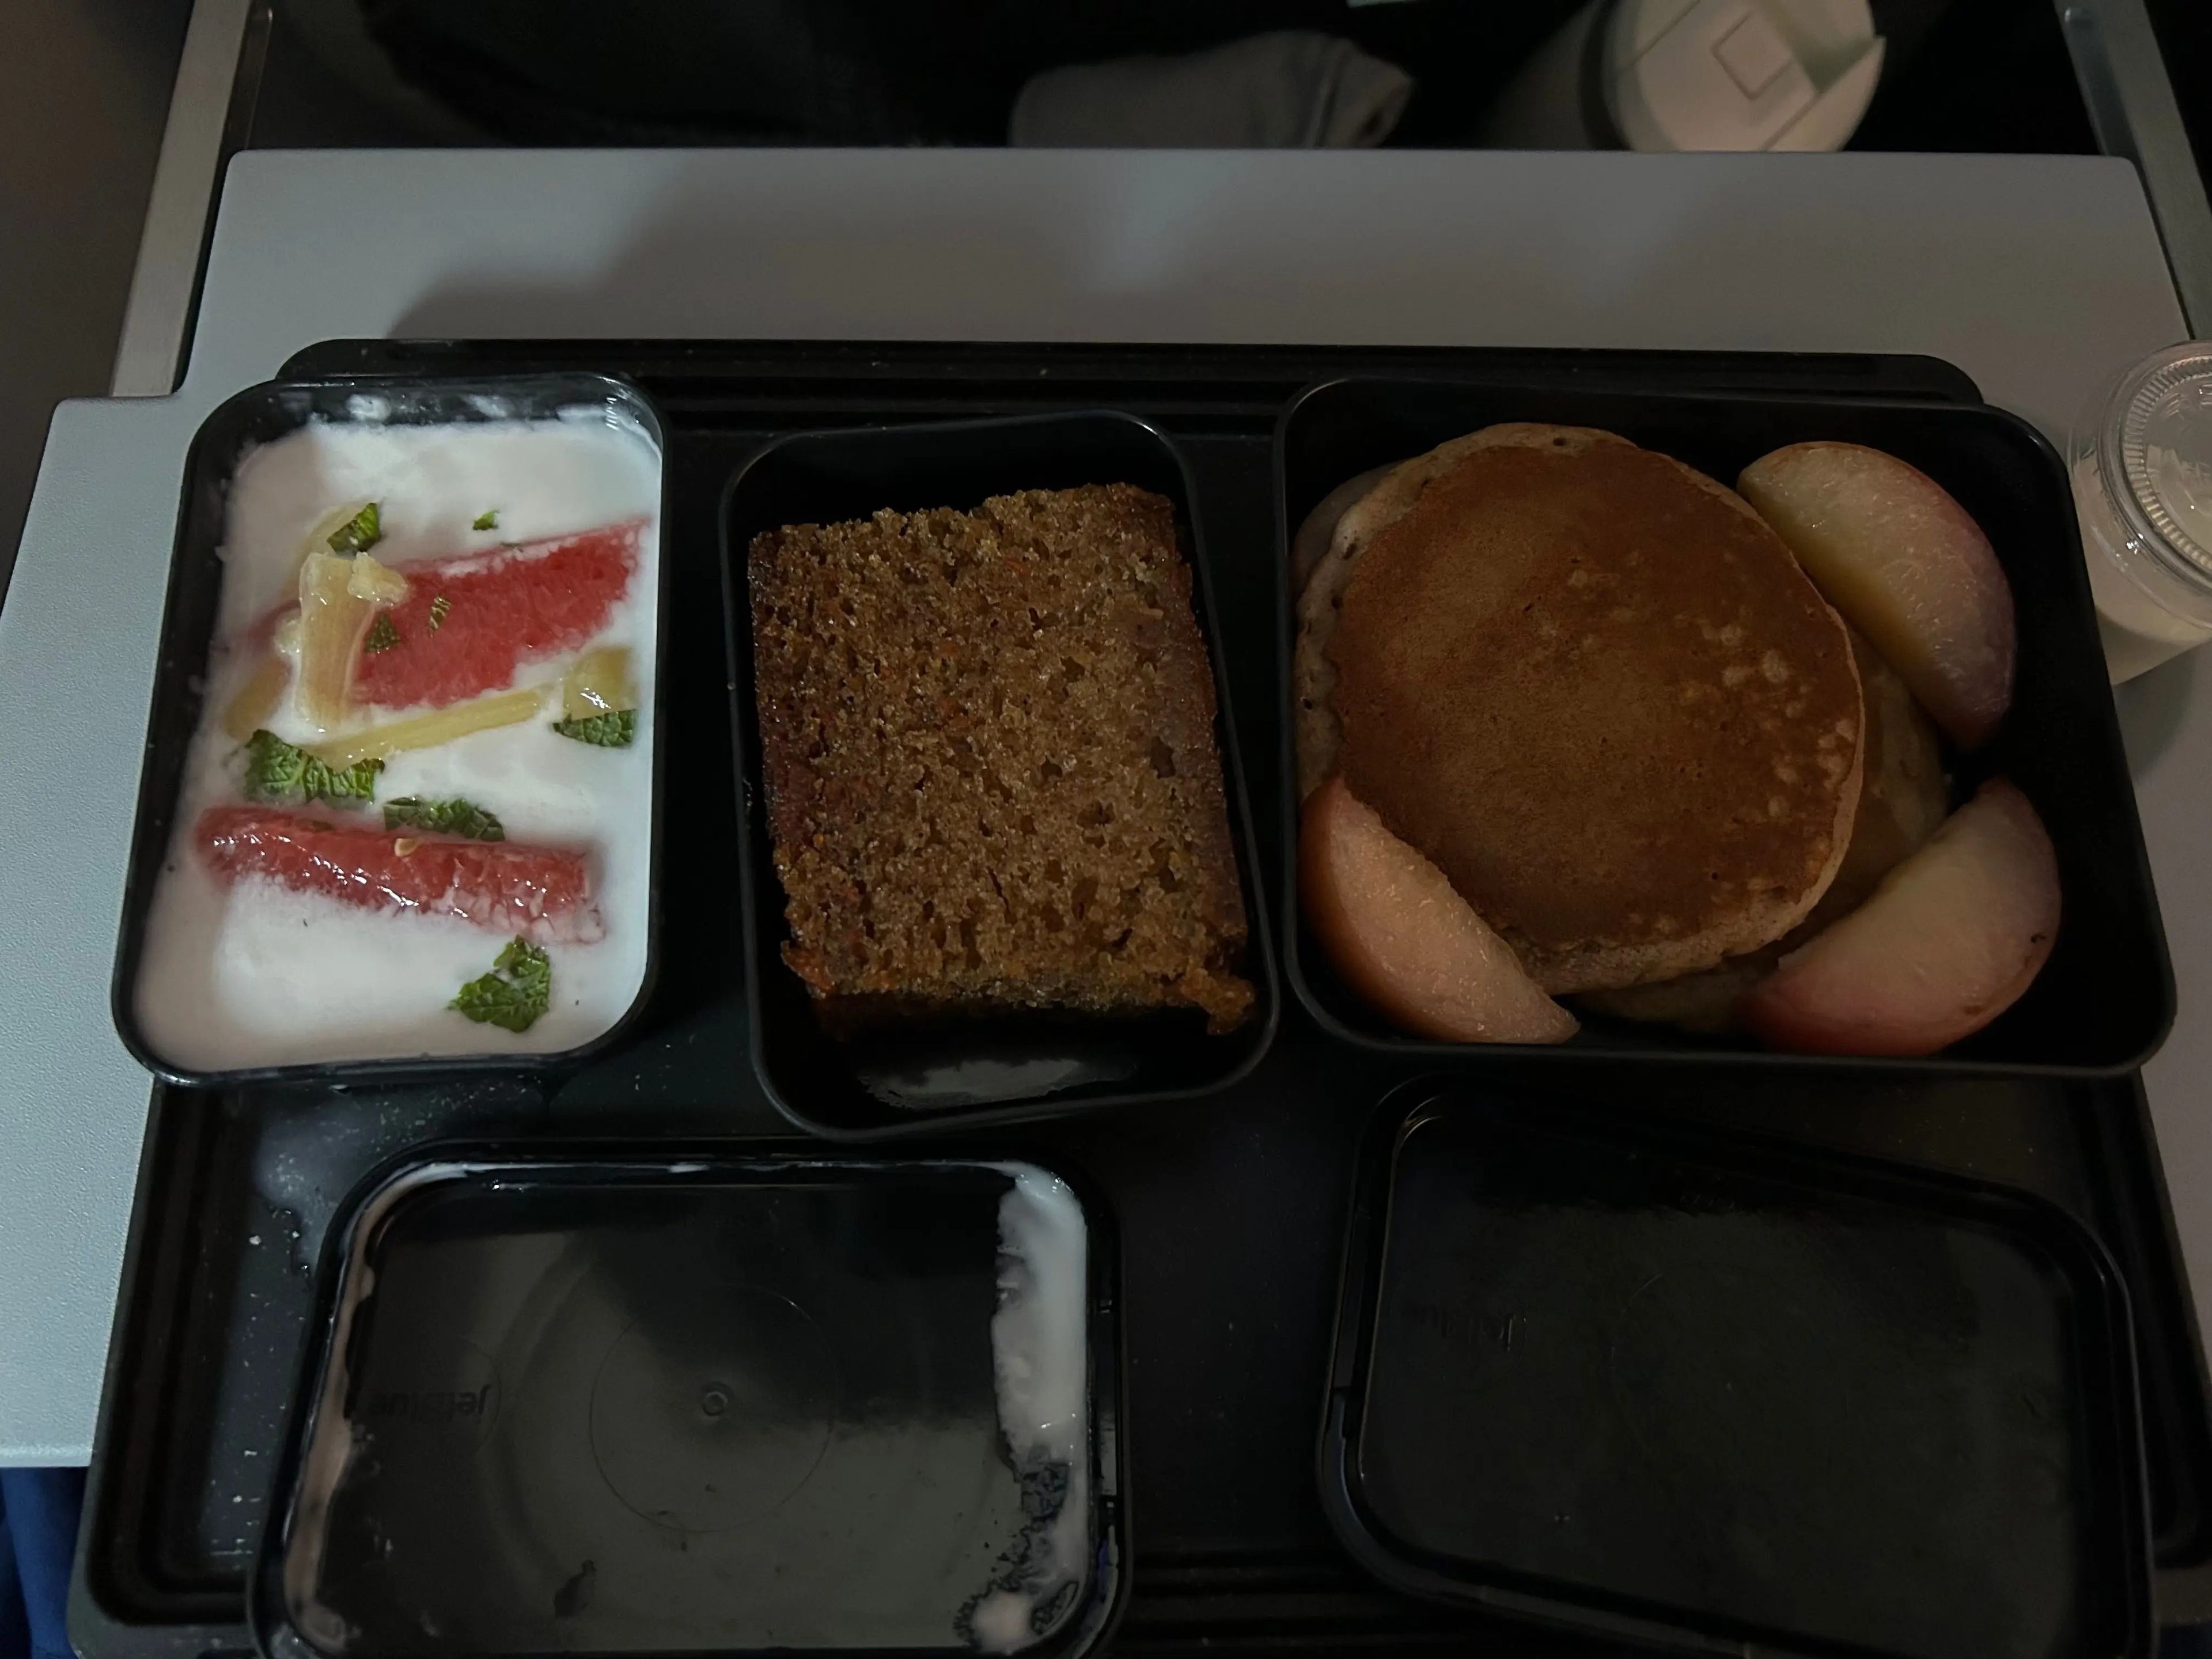 The economy breakfast on a JetBlue flight.